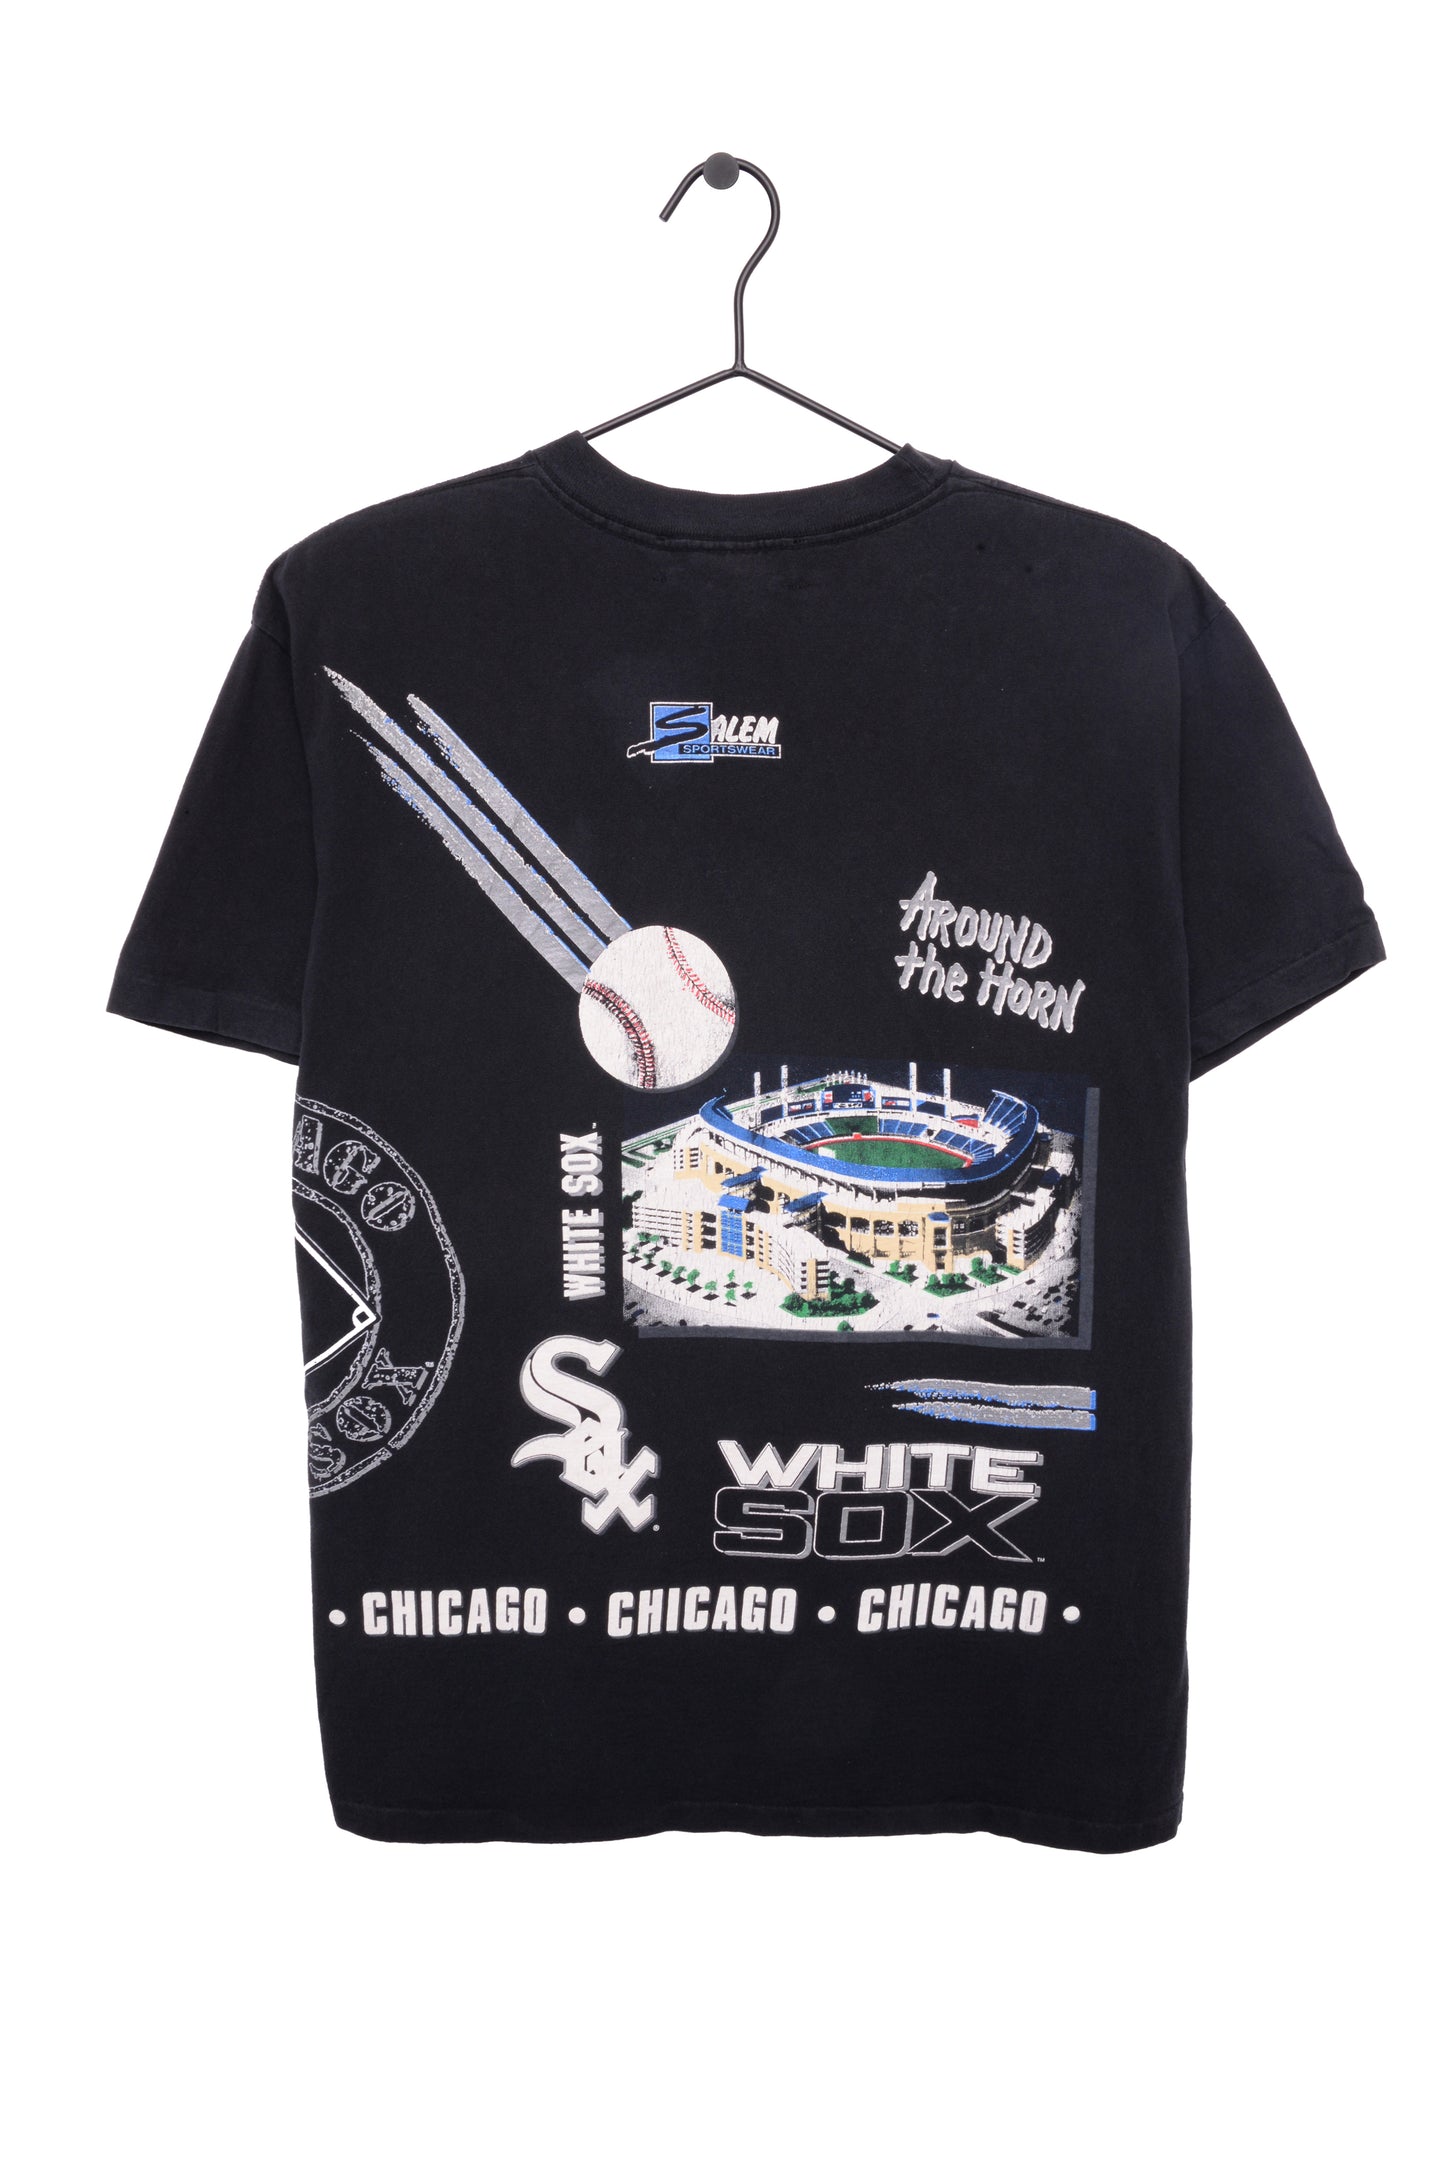 1991 Chicago White Sox Tee USA